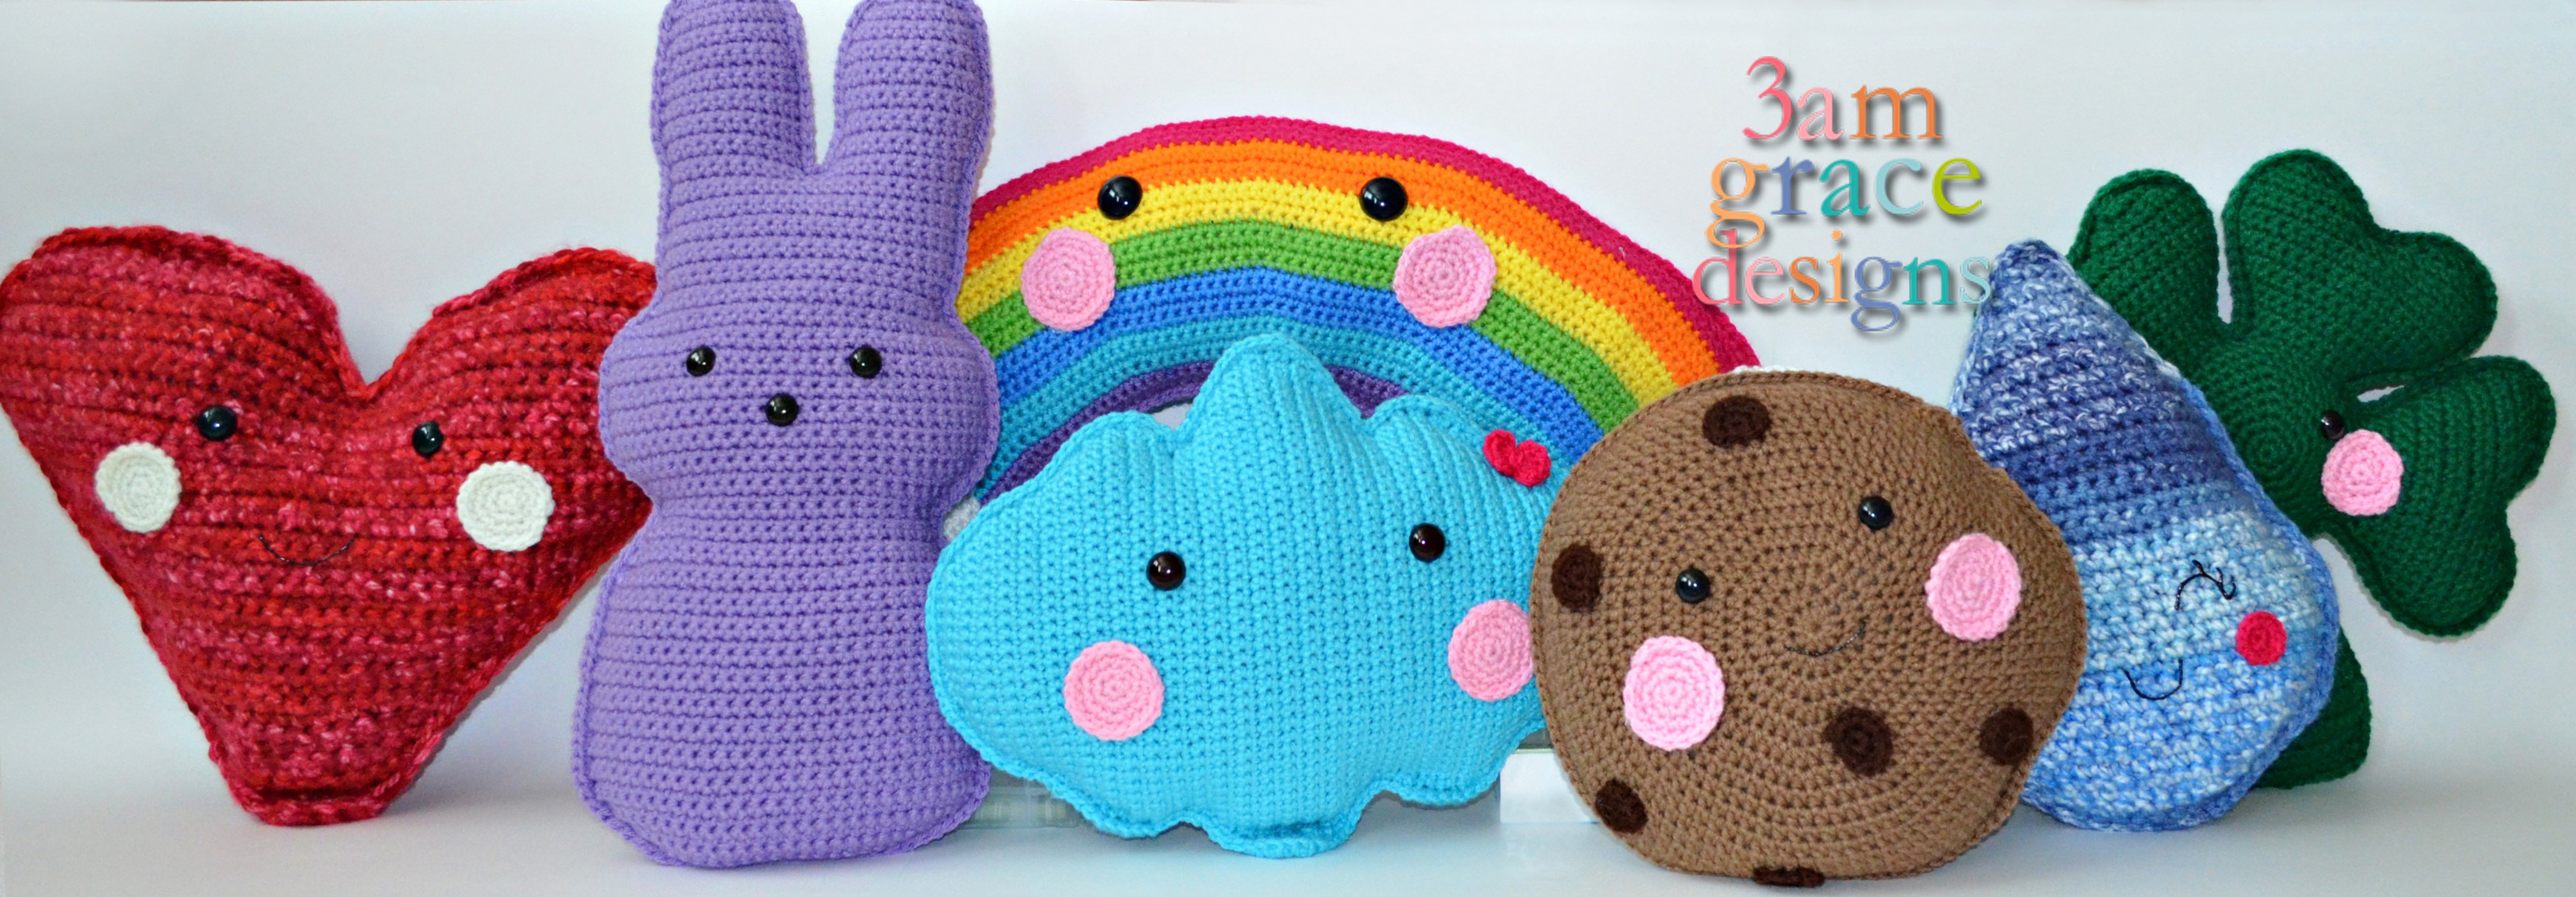 Crochet Elephant Pillow Pattern 3amgracedesigns Free Crochet Patterns Amigurimi Patterns C2c